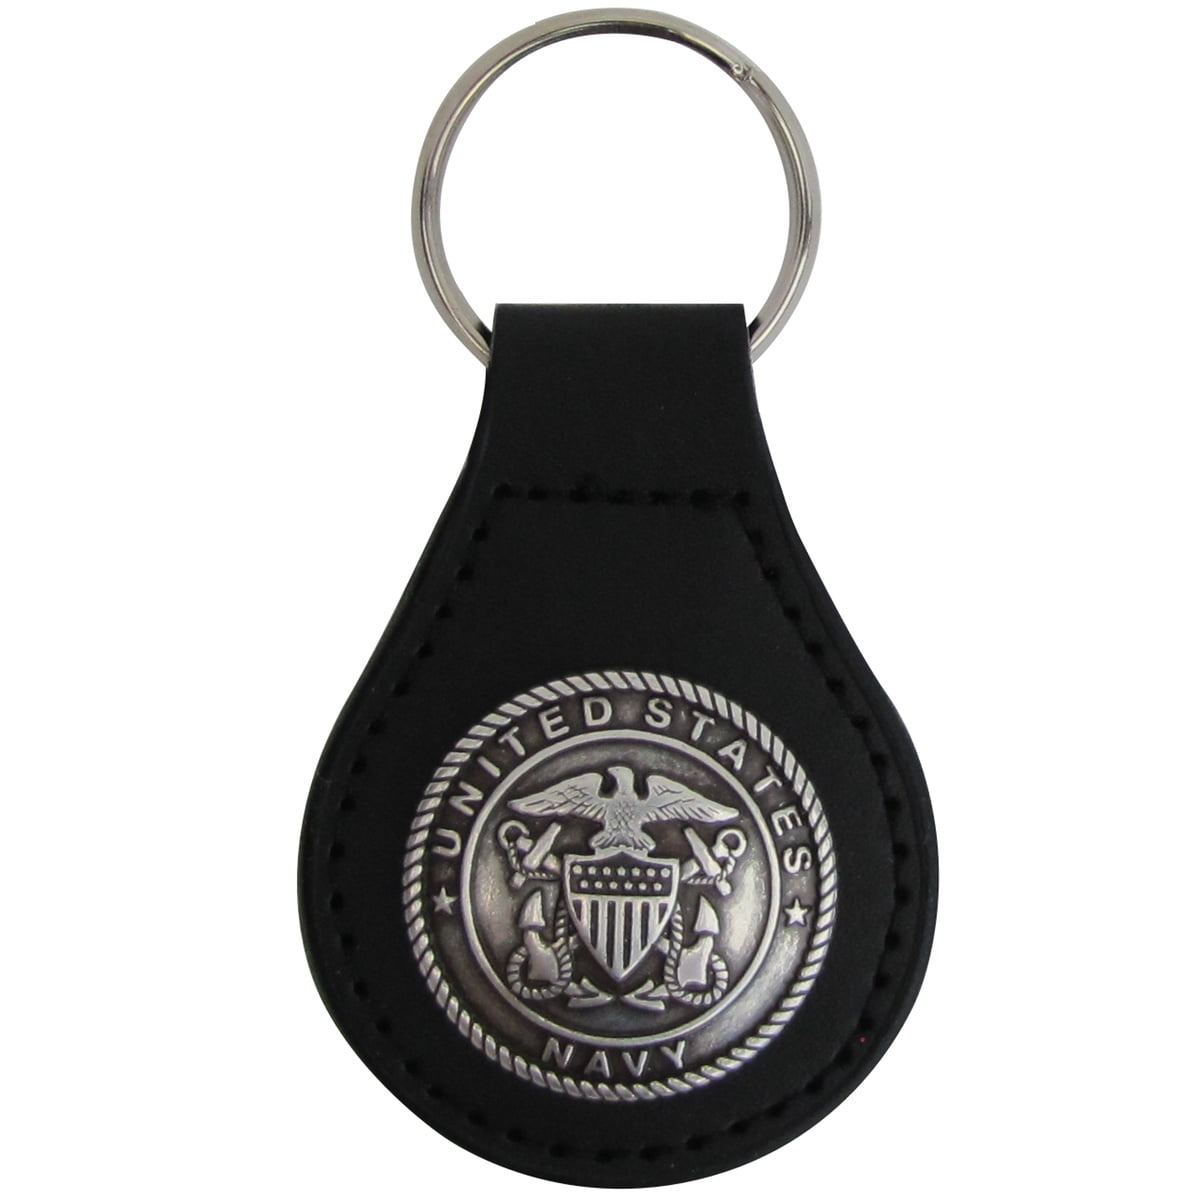 Keychain Door Car Key Chain Tags Keyring Ring Chain Keychain Supplies  Antique Silver Tone Wholesale Bulk Lots Y6KF1 Golf Lady